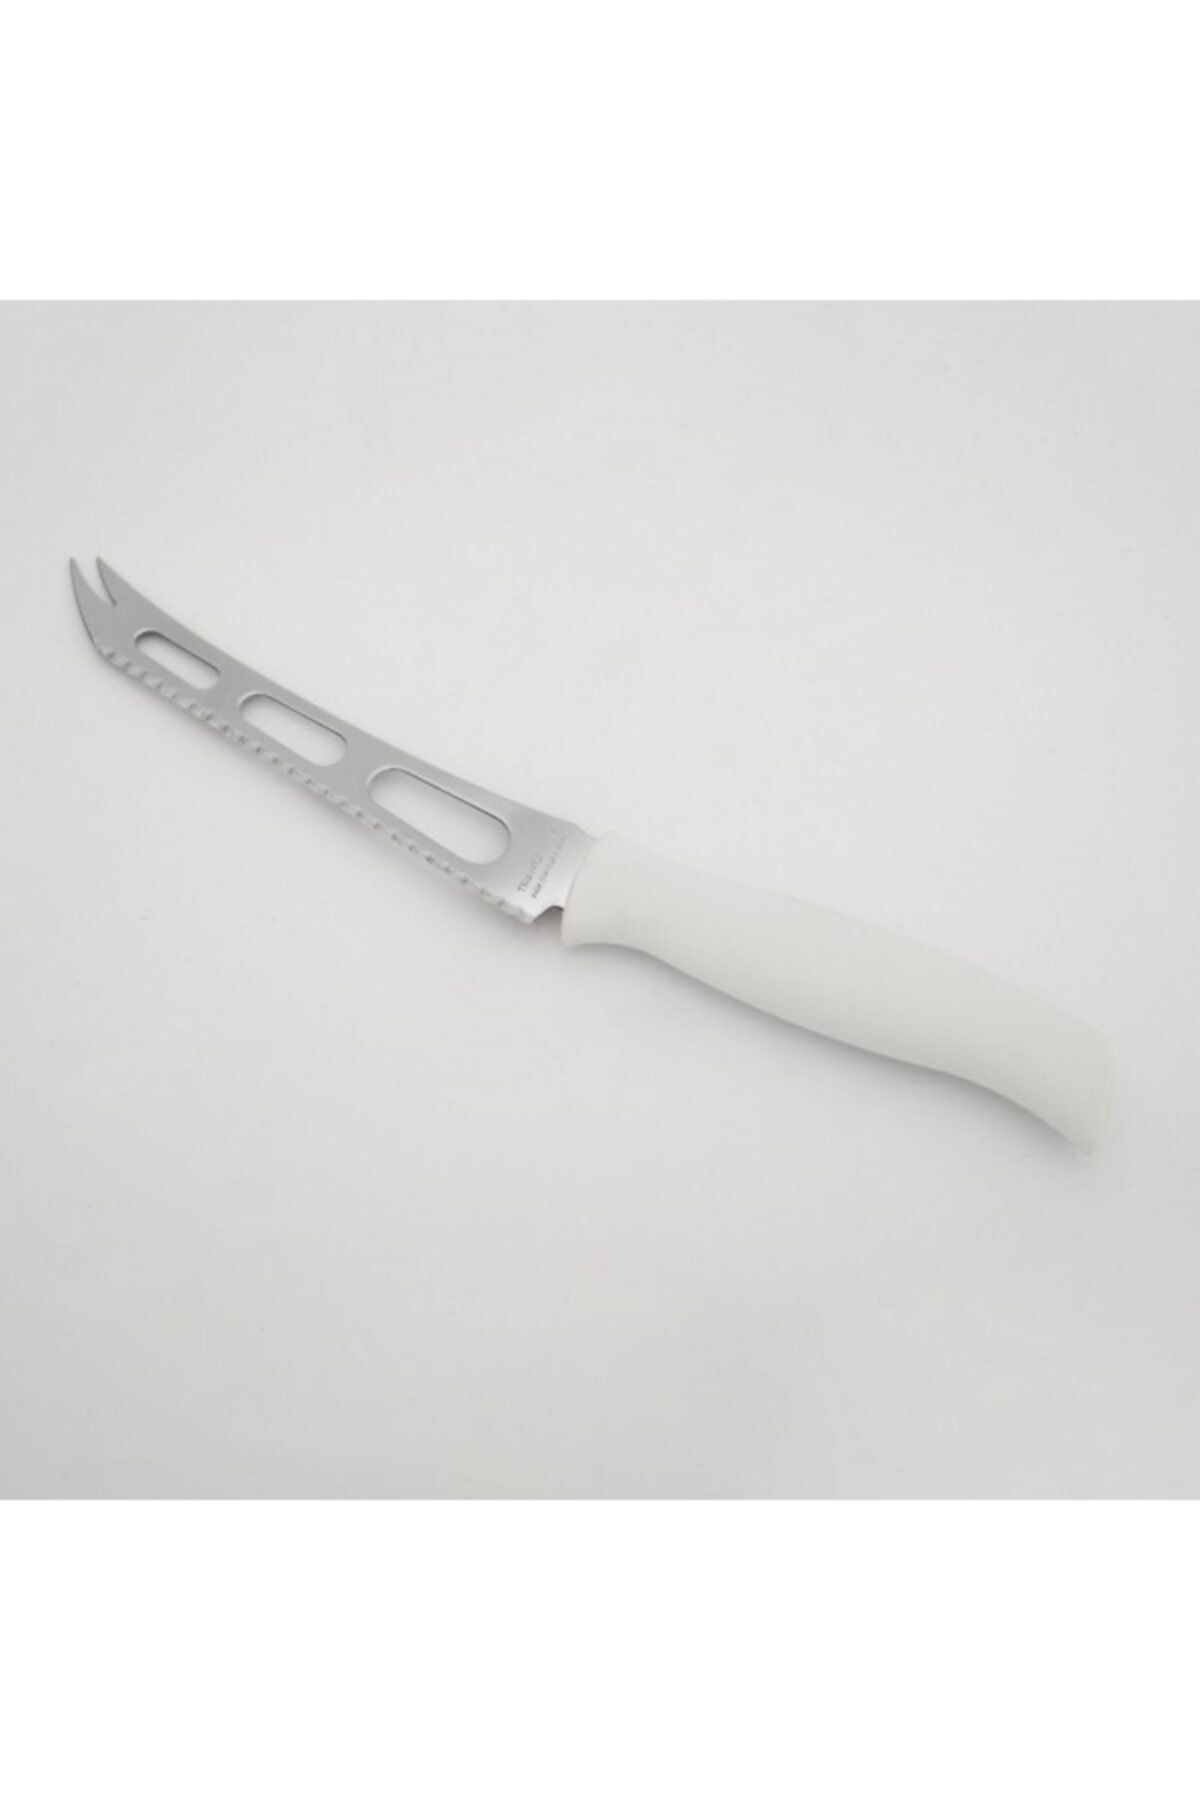 Ün-Ev Peynir Bıçağı Beyaz Sap 1 Ad. 28 Cm. Orijinal Brezilya Menşeyli